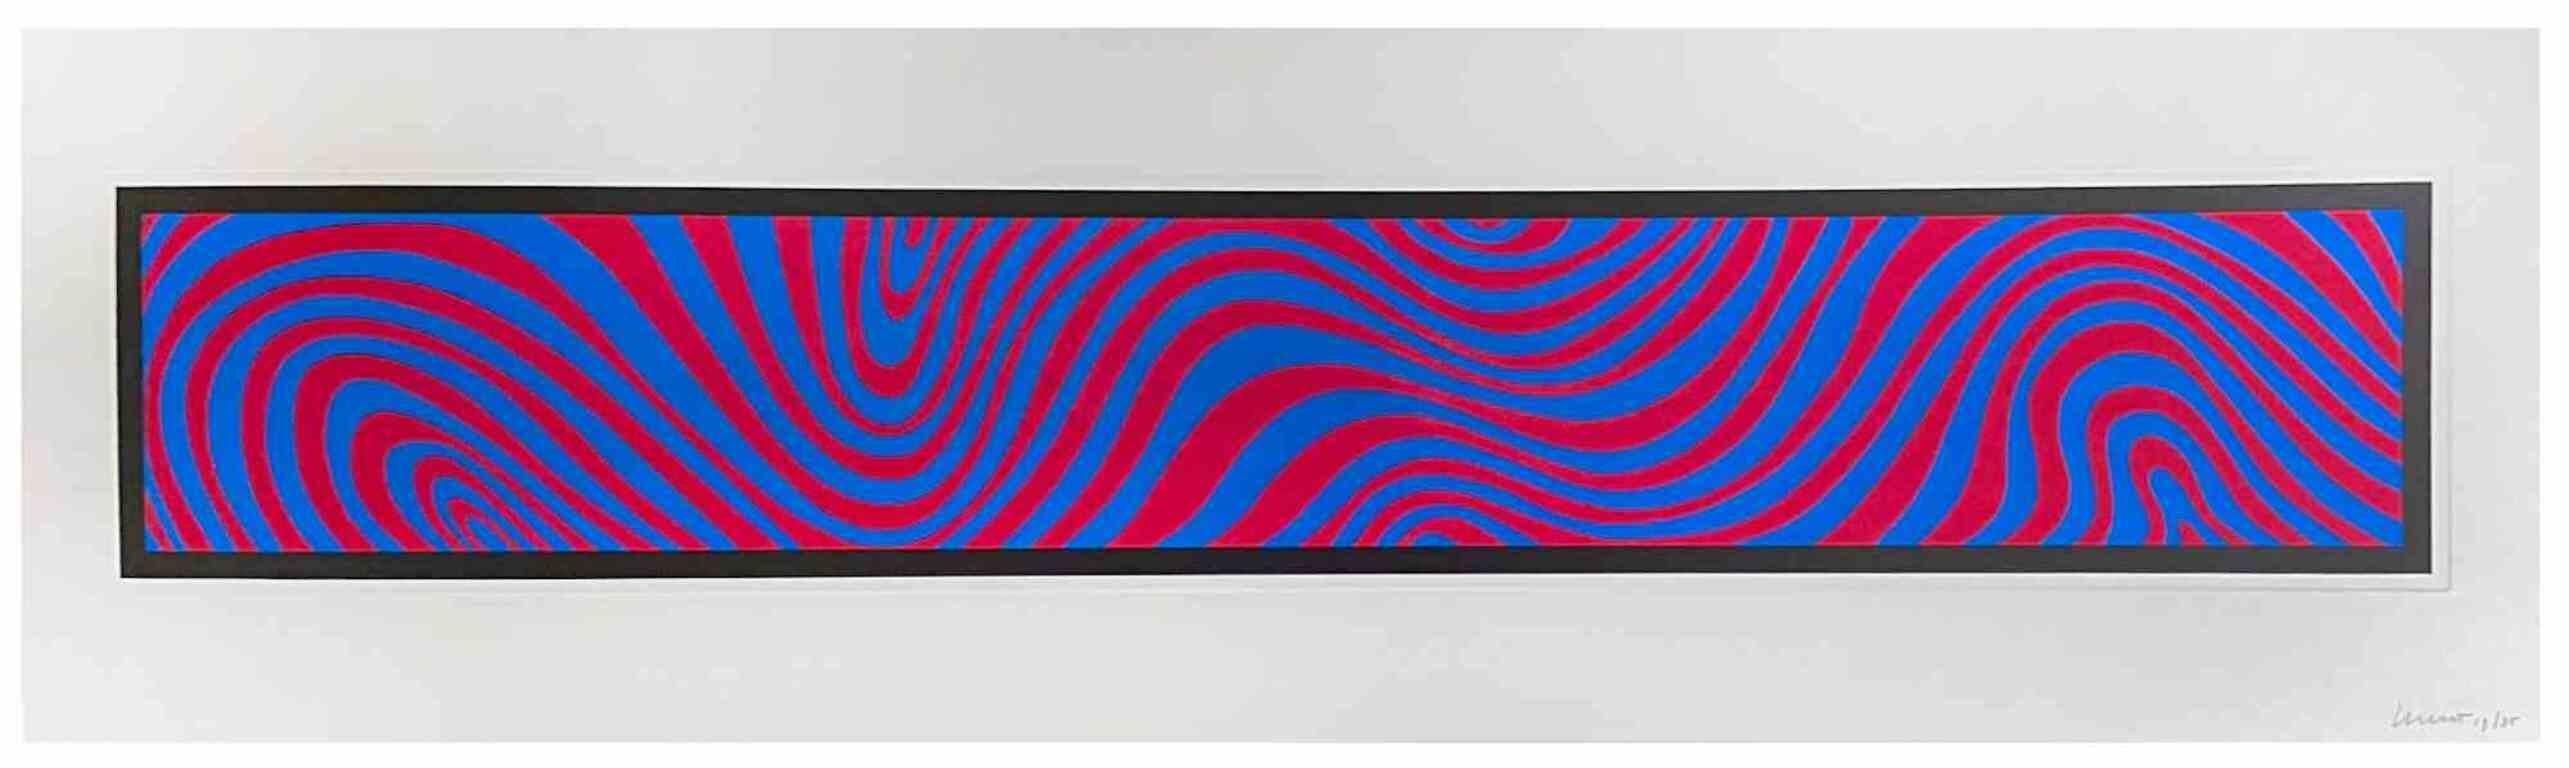 Sol LeWitt Abstract Print - Wavy Irregular Bands - Etching by Sol Lewitt - 1996